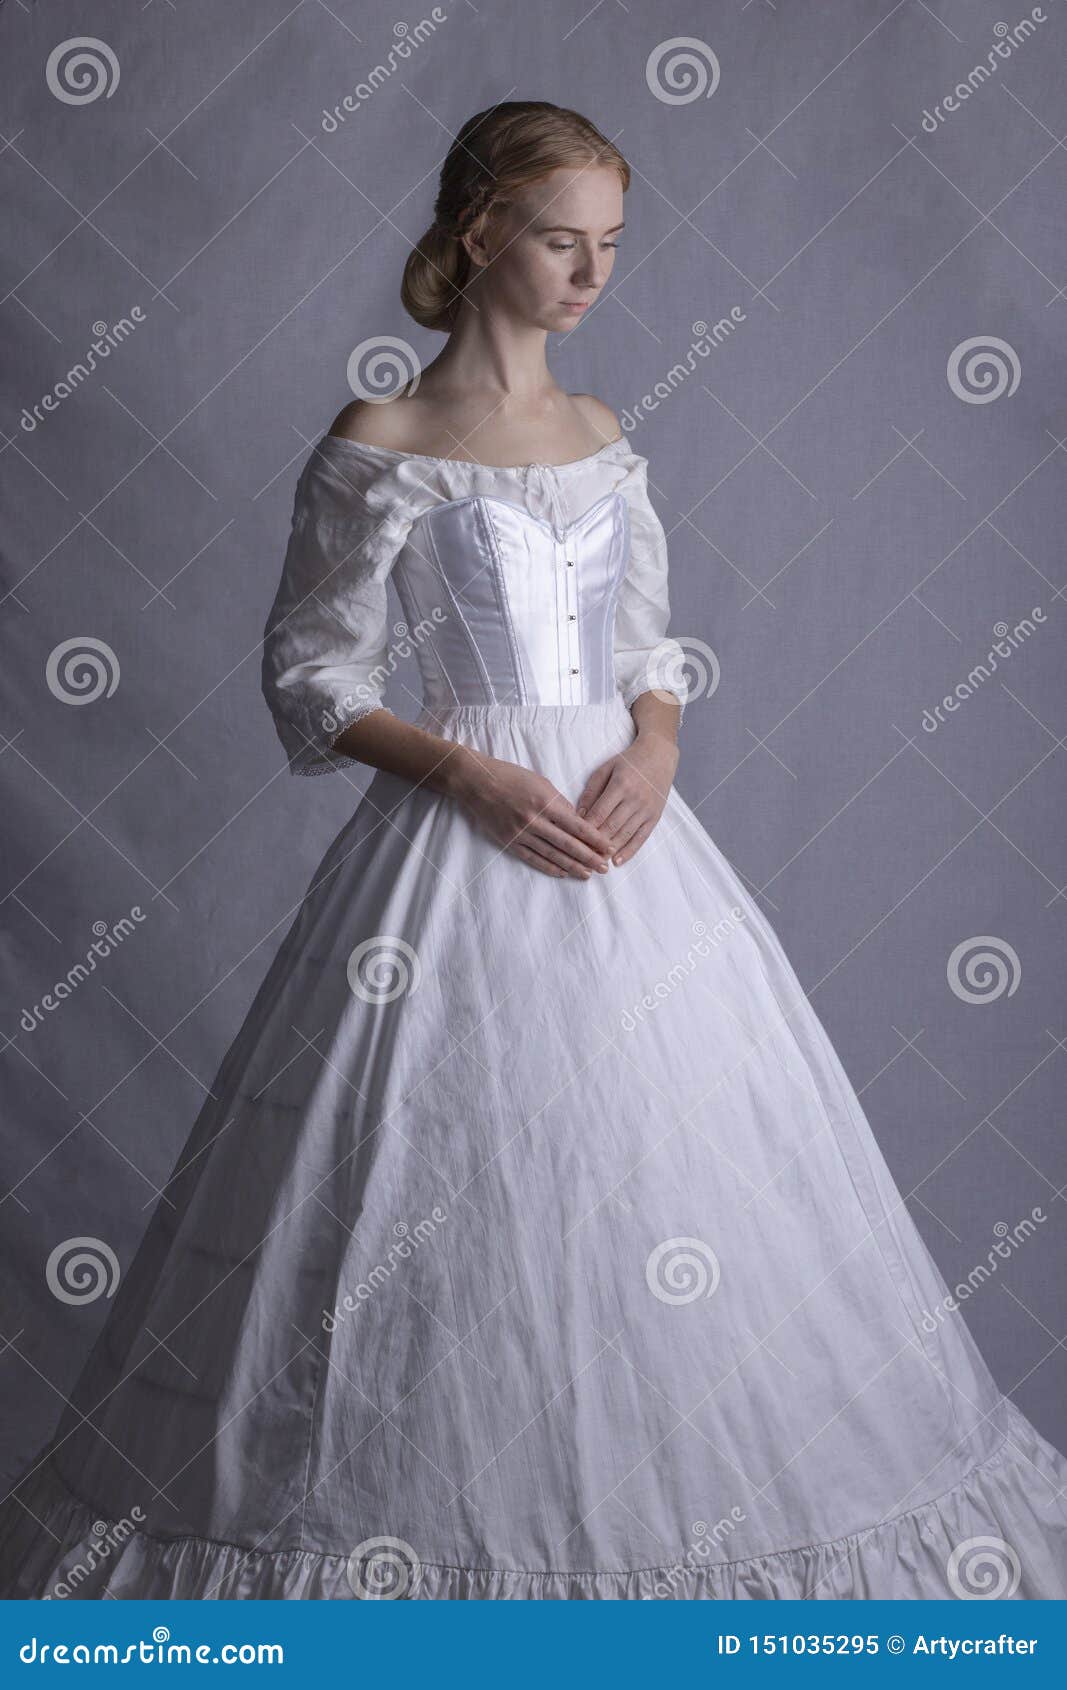 Victorian Woman in Underwear Stock Image - Image of ensemble, crinoline:  151035295